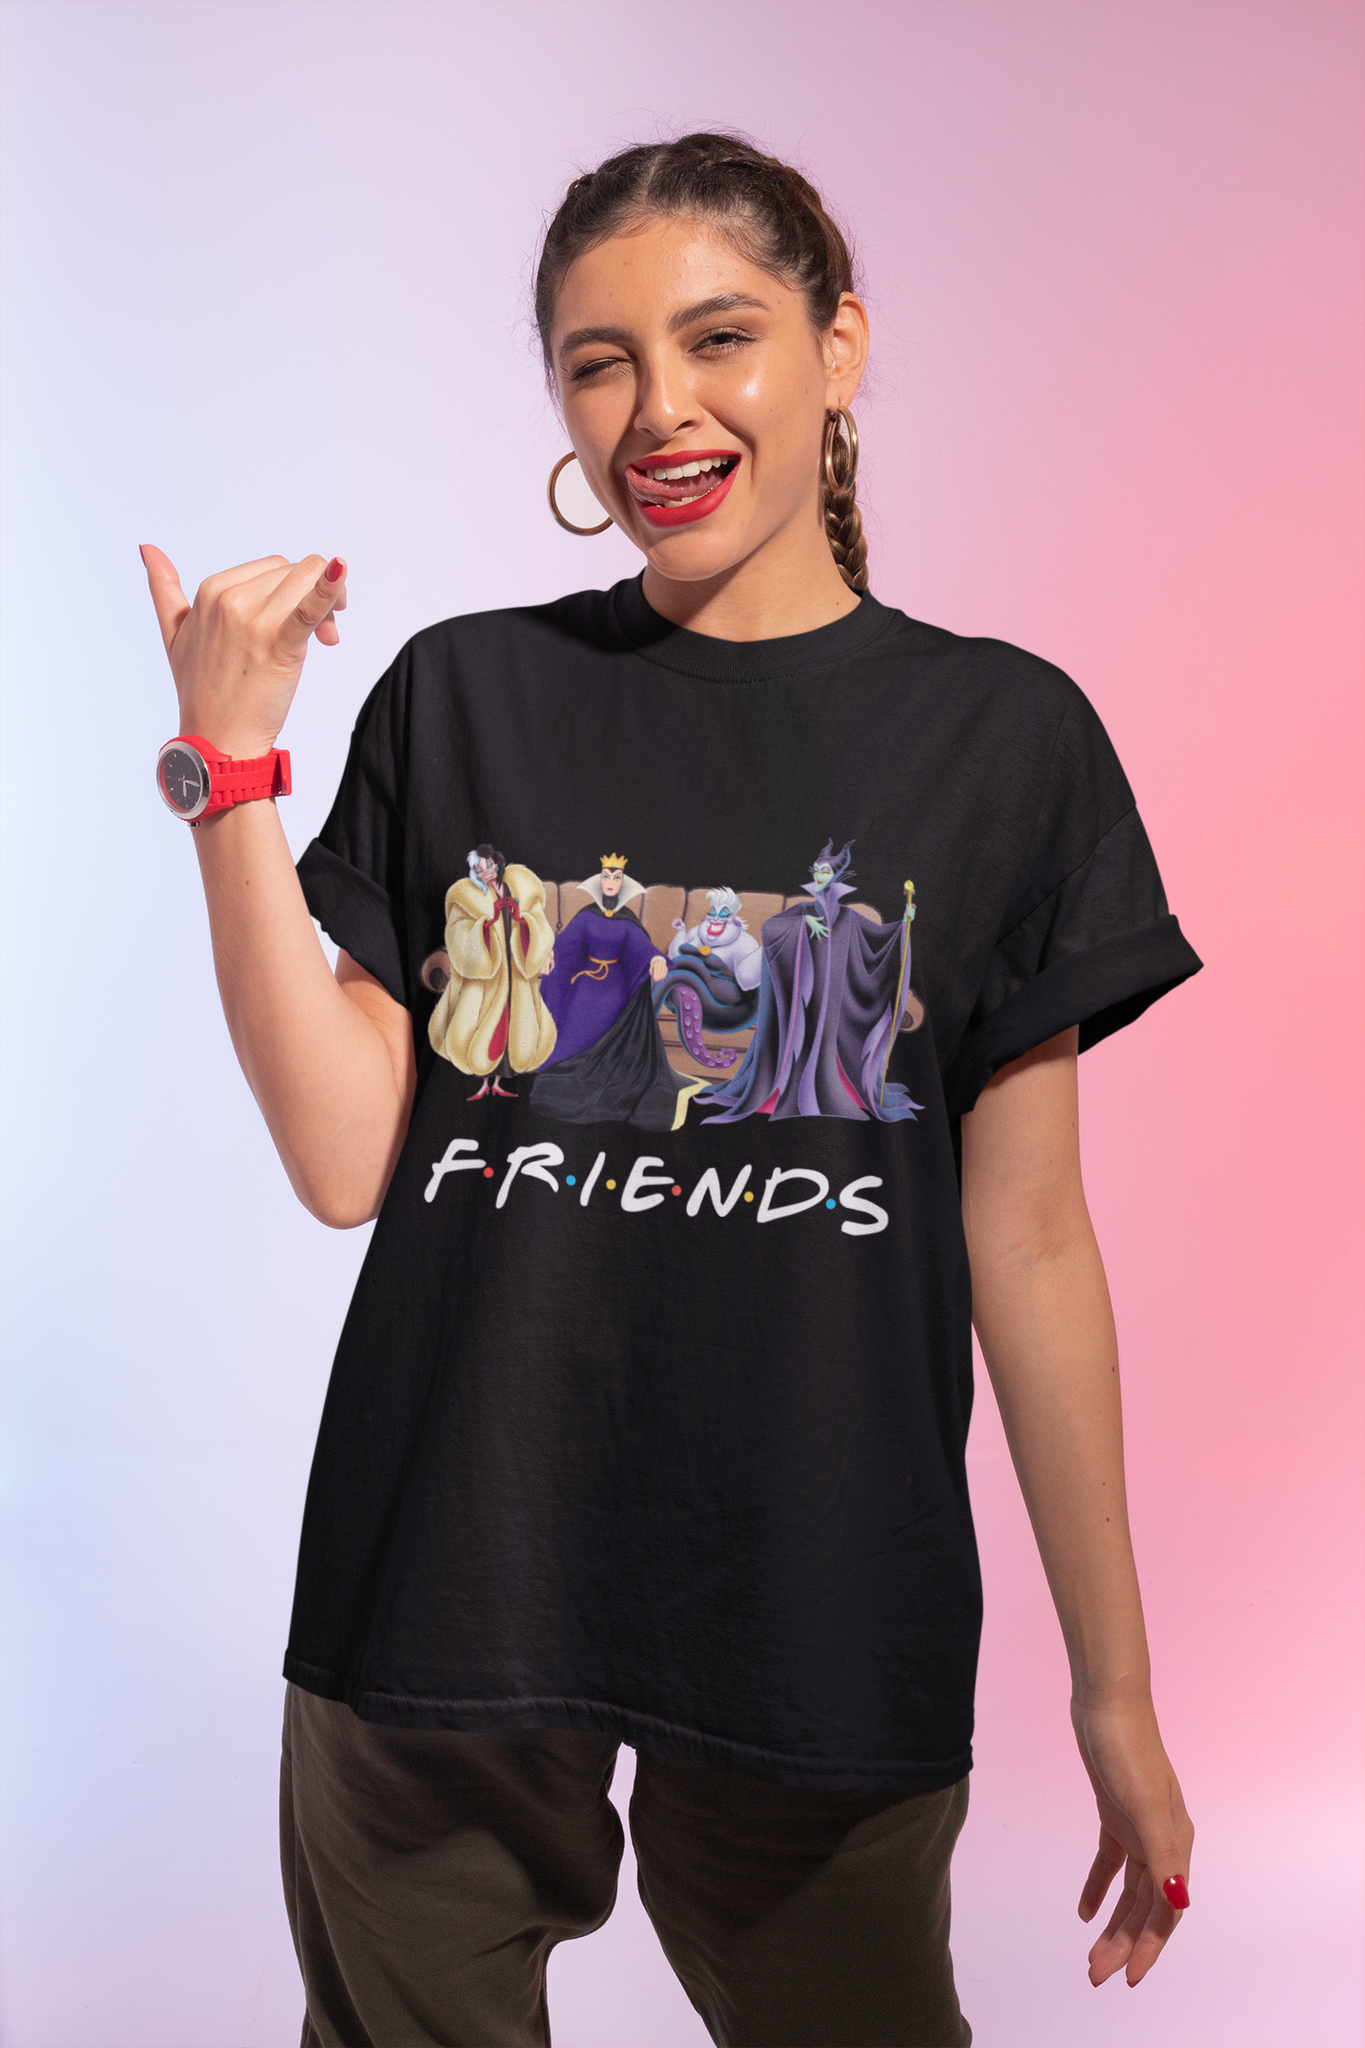 Disney Maleficent T Shirt, Cruella De Vil The Queen Ursula Maleficent Tshirt, Friends Shirt, Disney Villains Tshirt